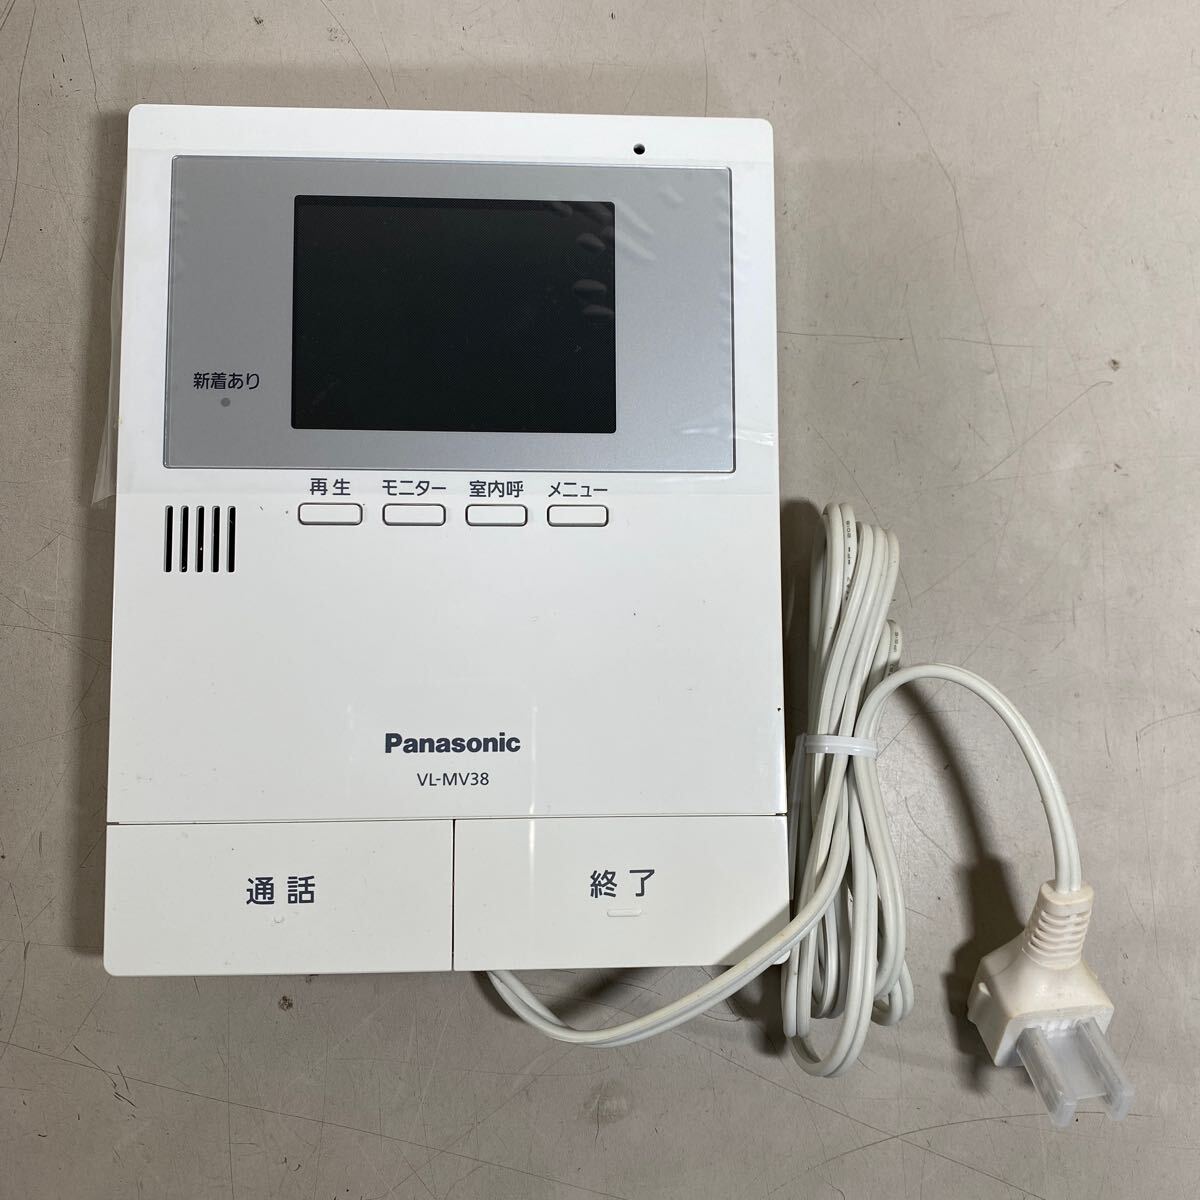 a** б/у товар Panasonic Panasonic телевизор домофон шнур электропитания тип VL-SV38KL*